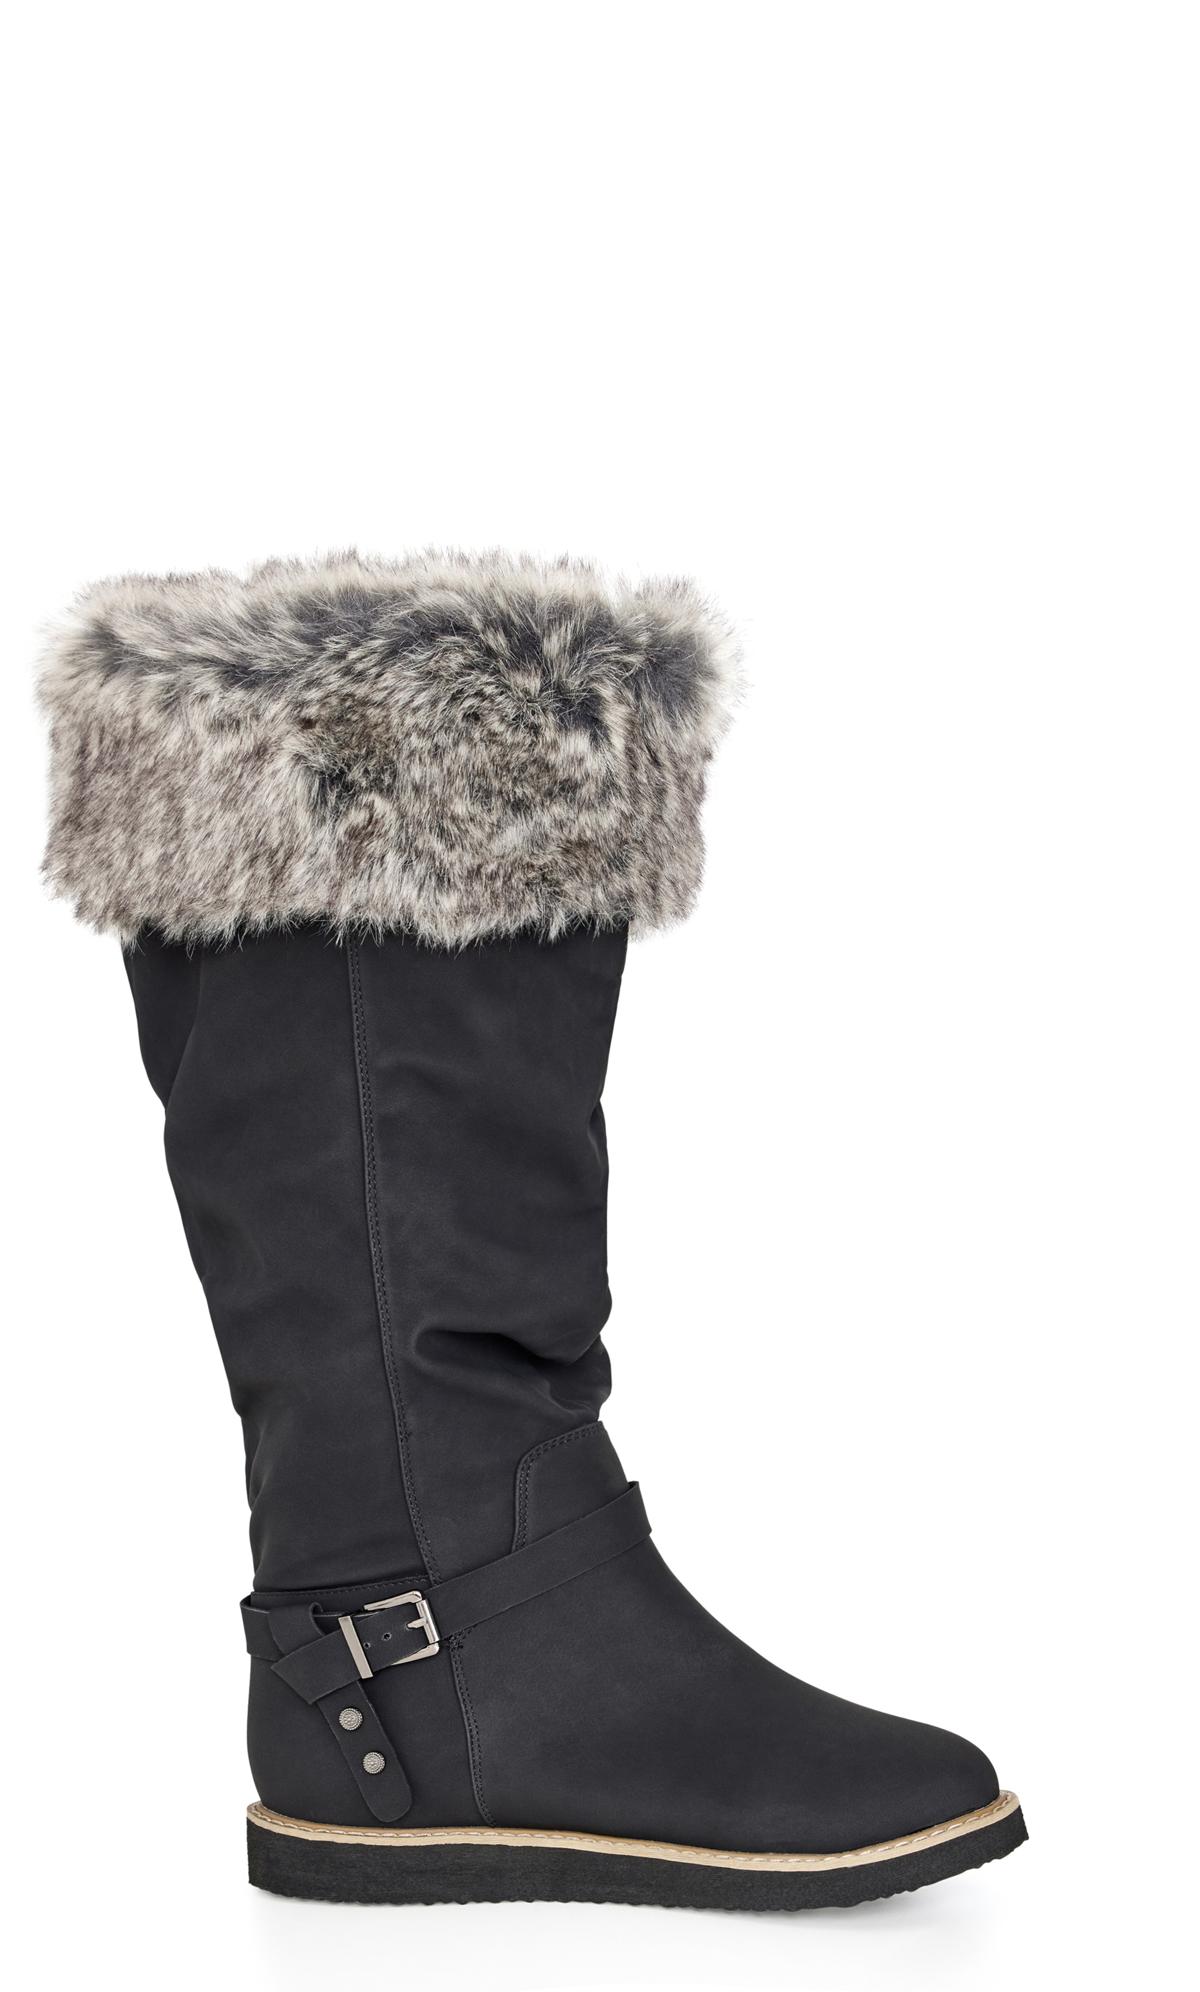 Evans Black Faux Fur Lined Knee High Snow Boots 1